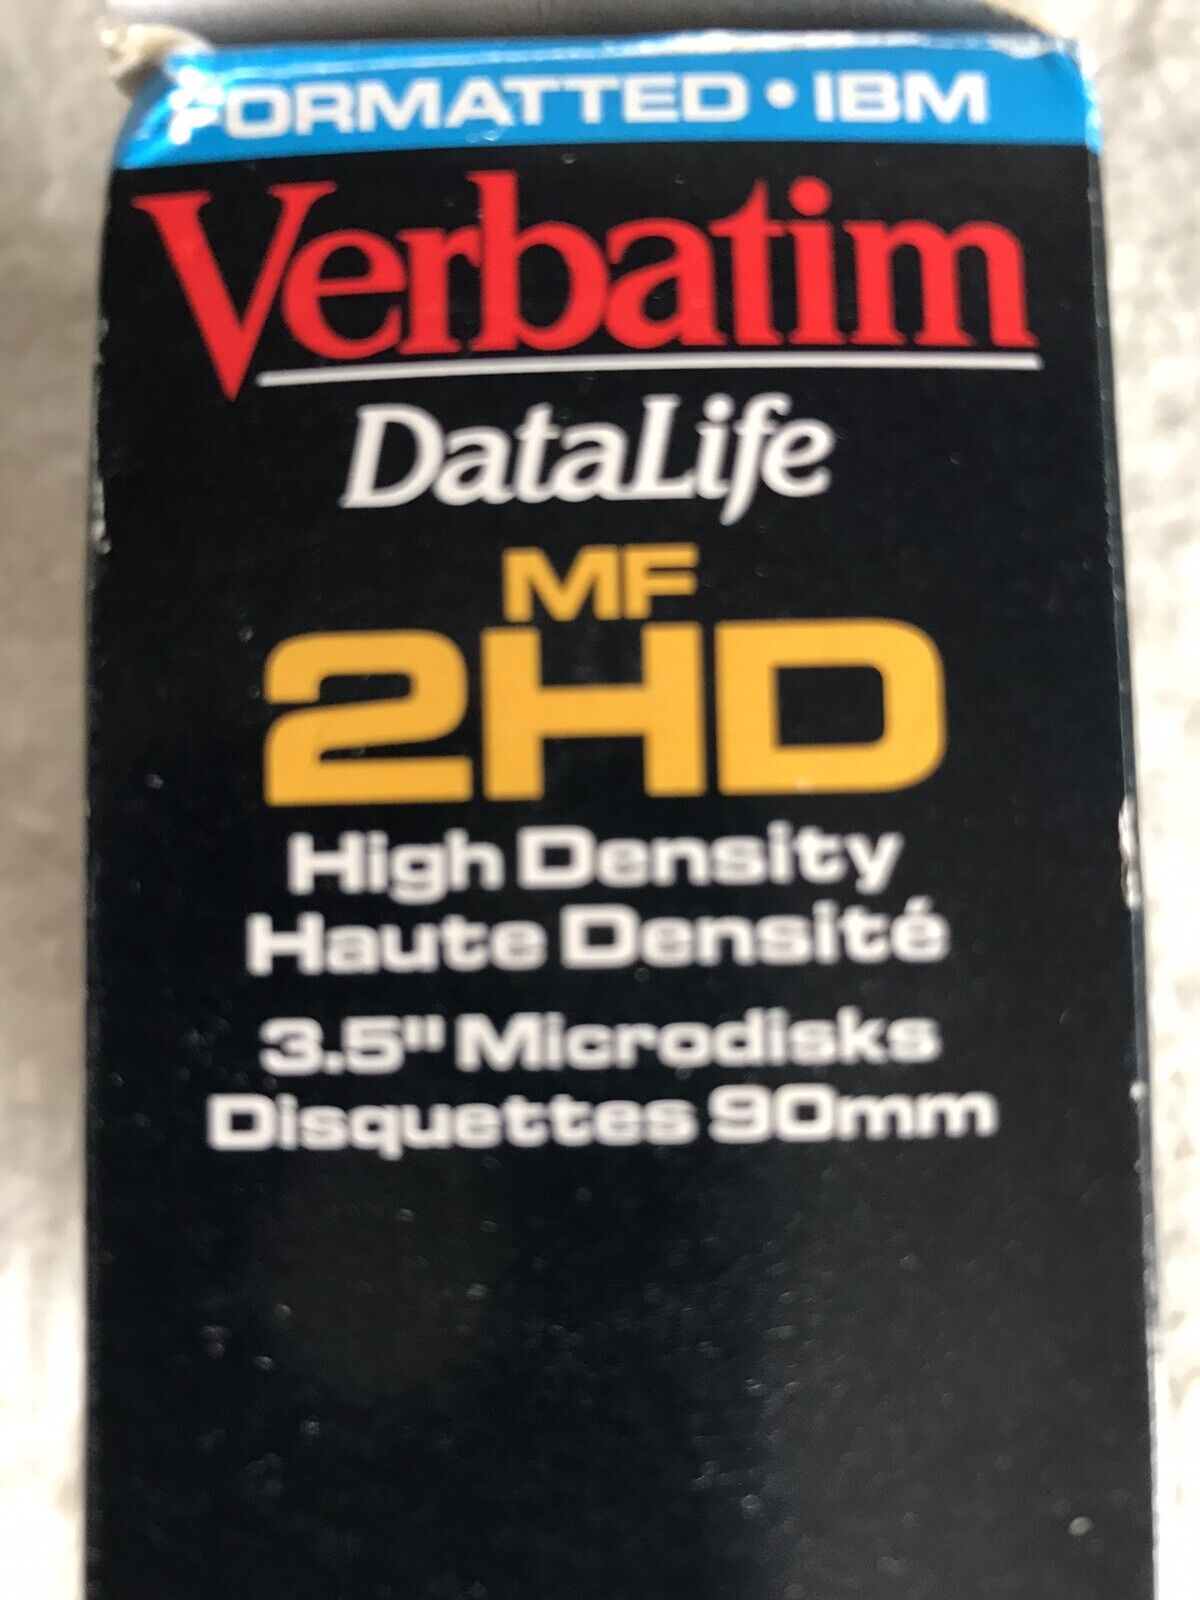 Vintage Verbatim Datalife 2HD 3.5” 9Disks IBM Format Double Sided New Old Stock